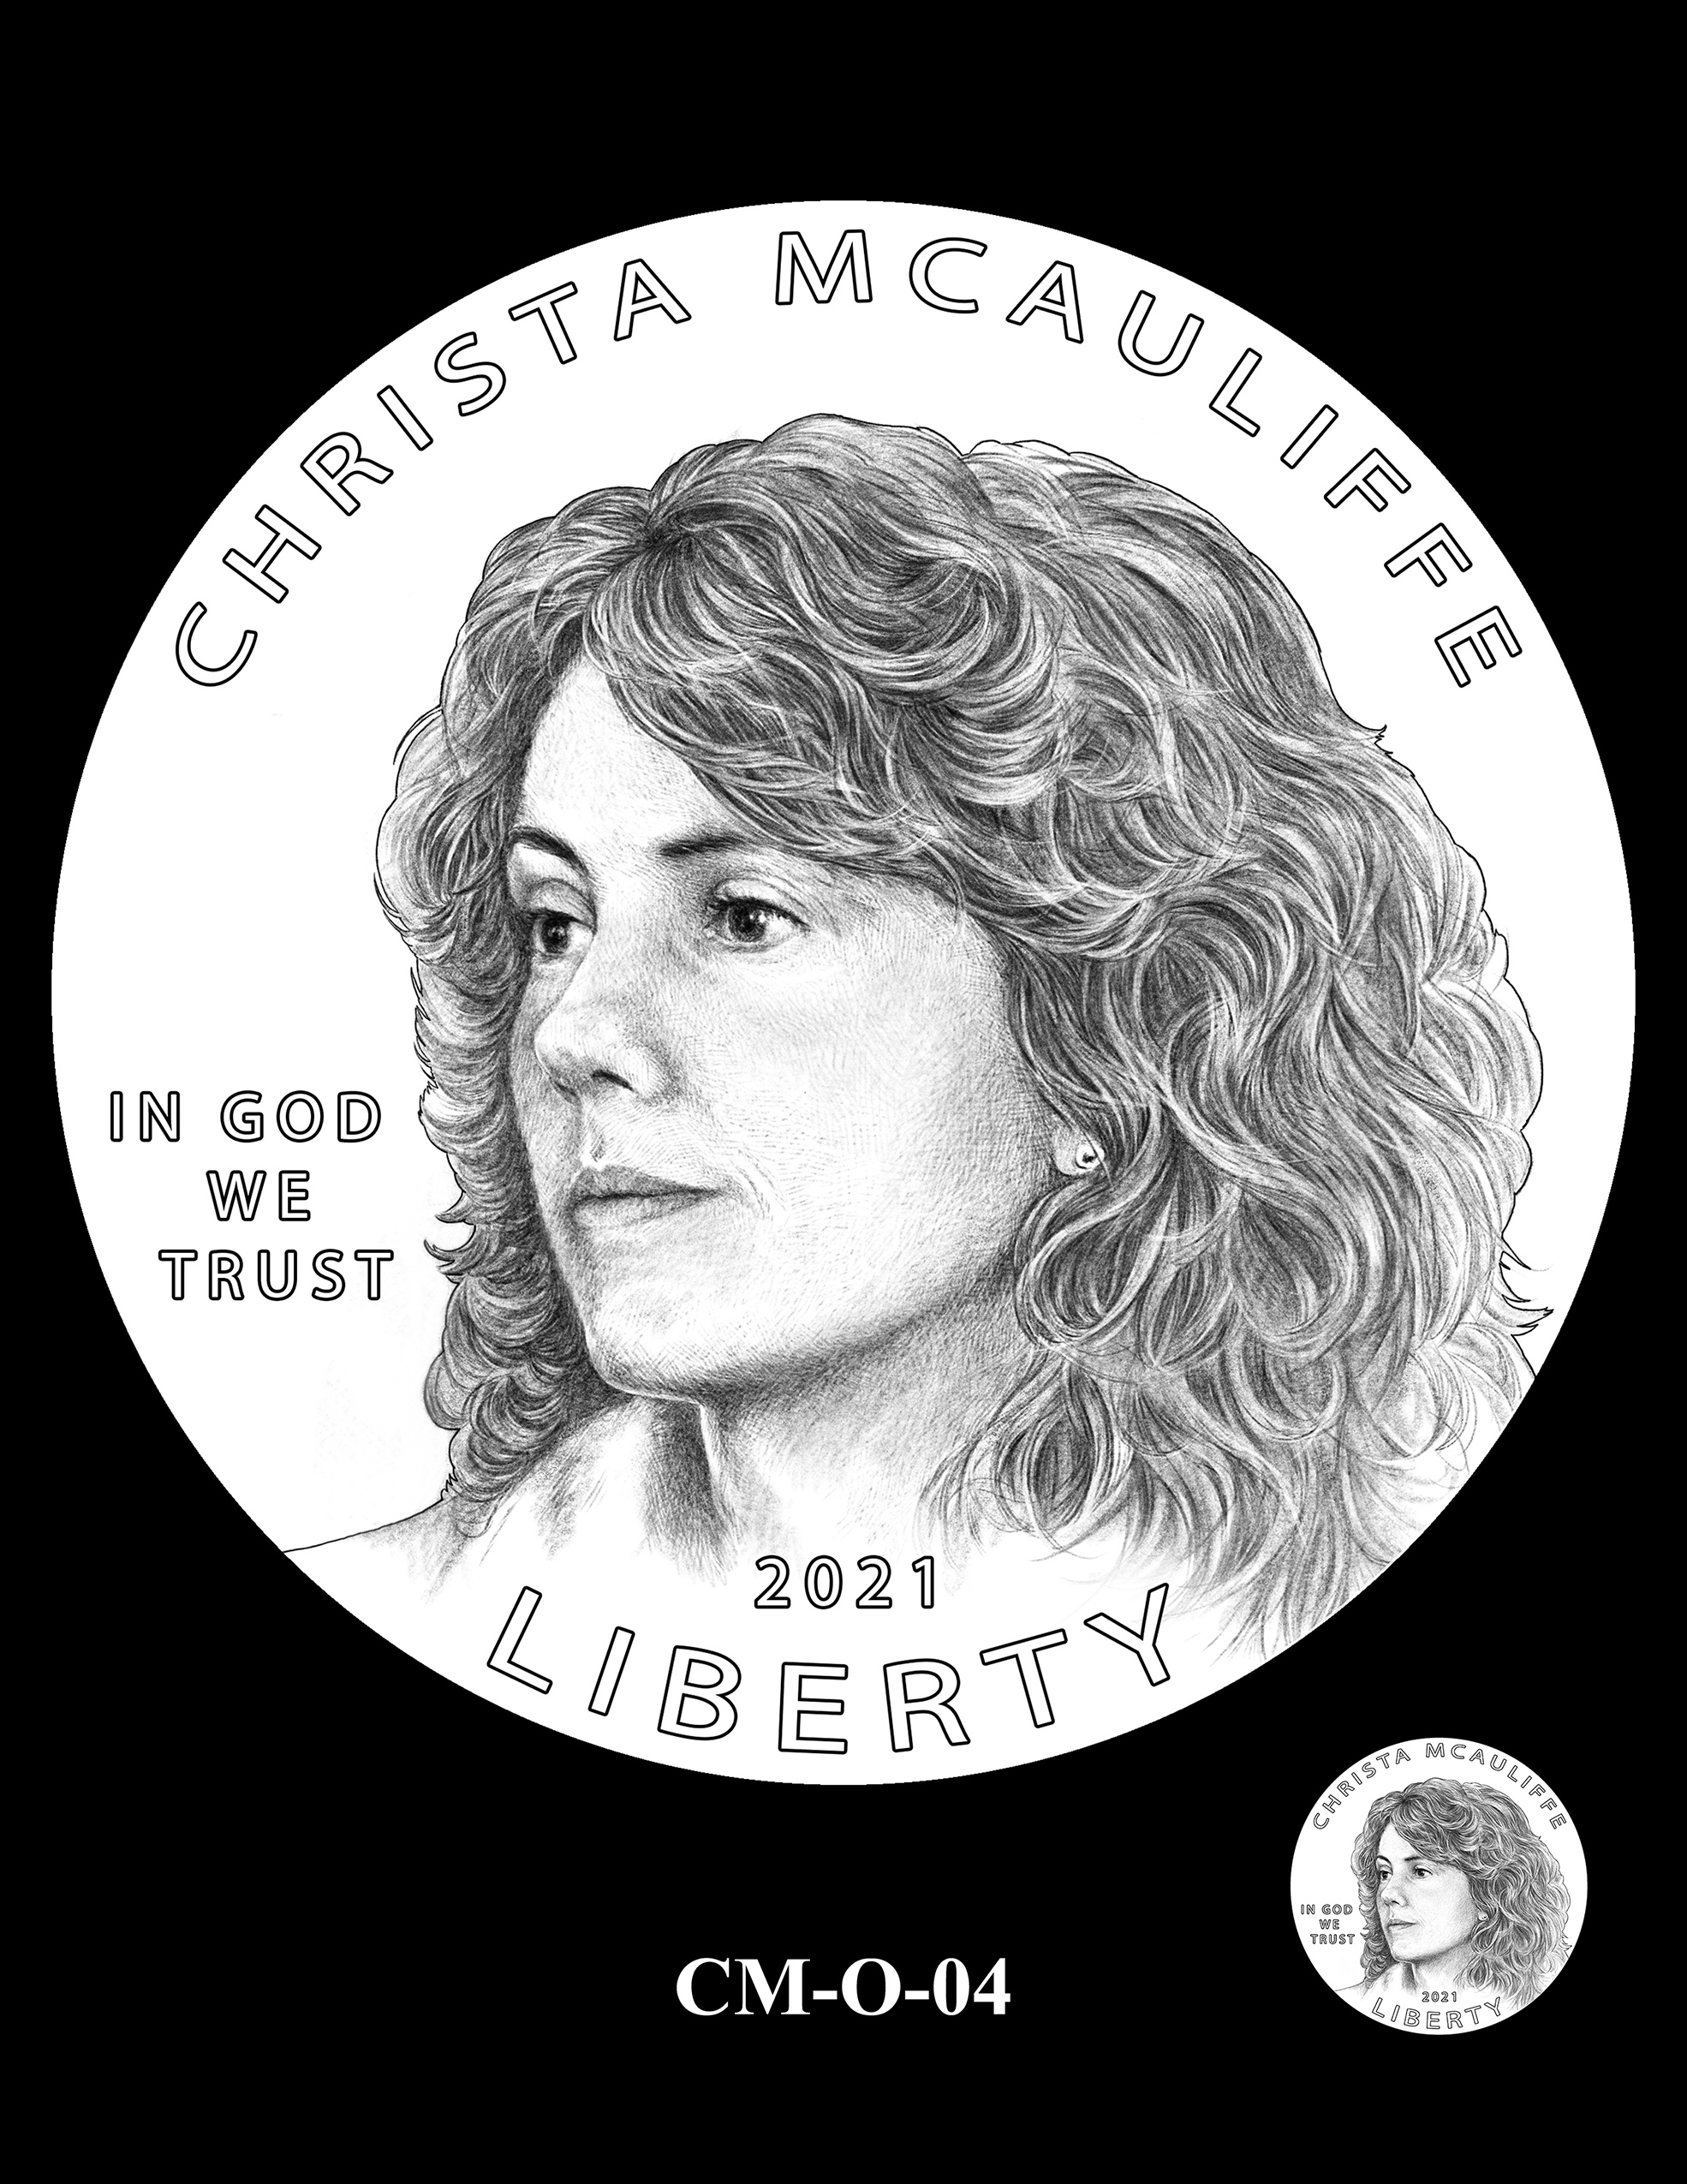 CM-O-04 -- 2021 Christa McAuliffe Commemorative Coin